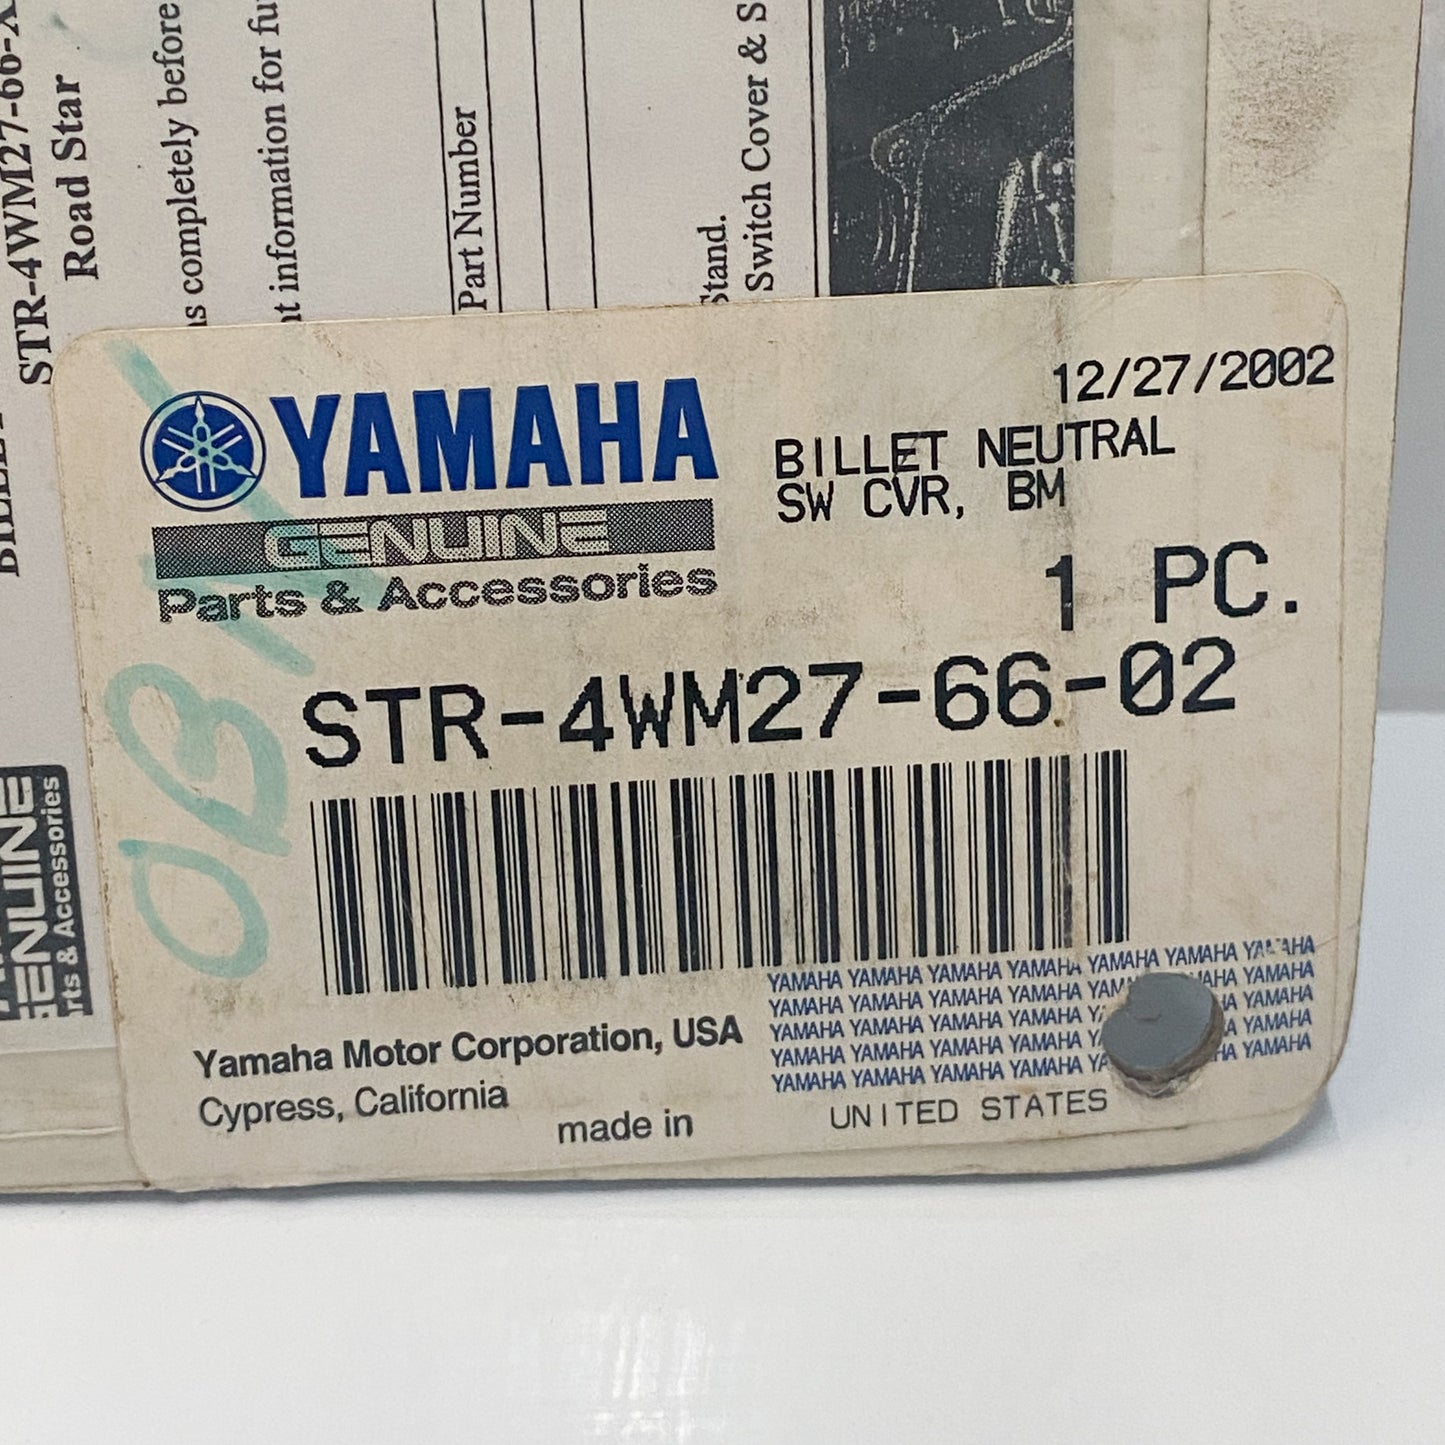 Yamaha Billet Neutral Switch Cover, Ball Milled STR-4WM27-66-02